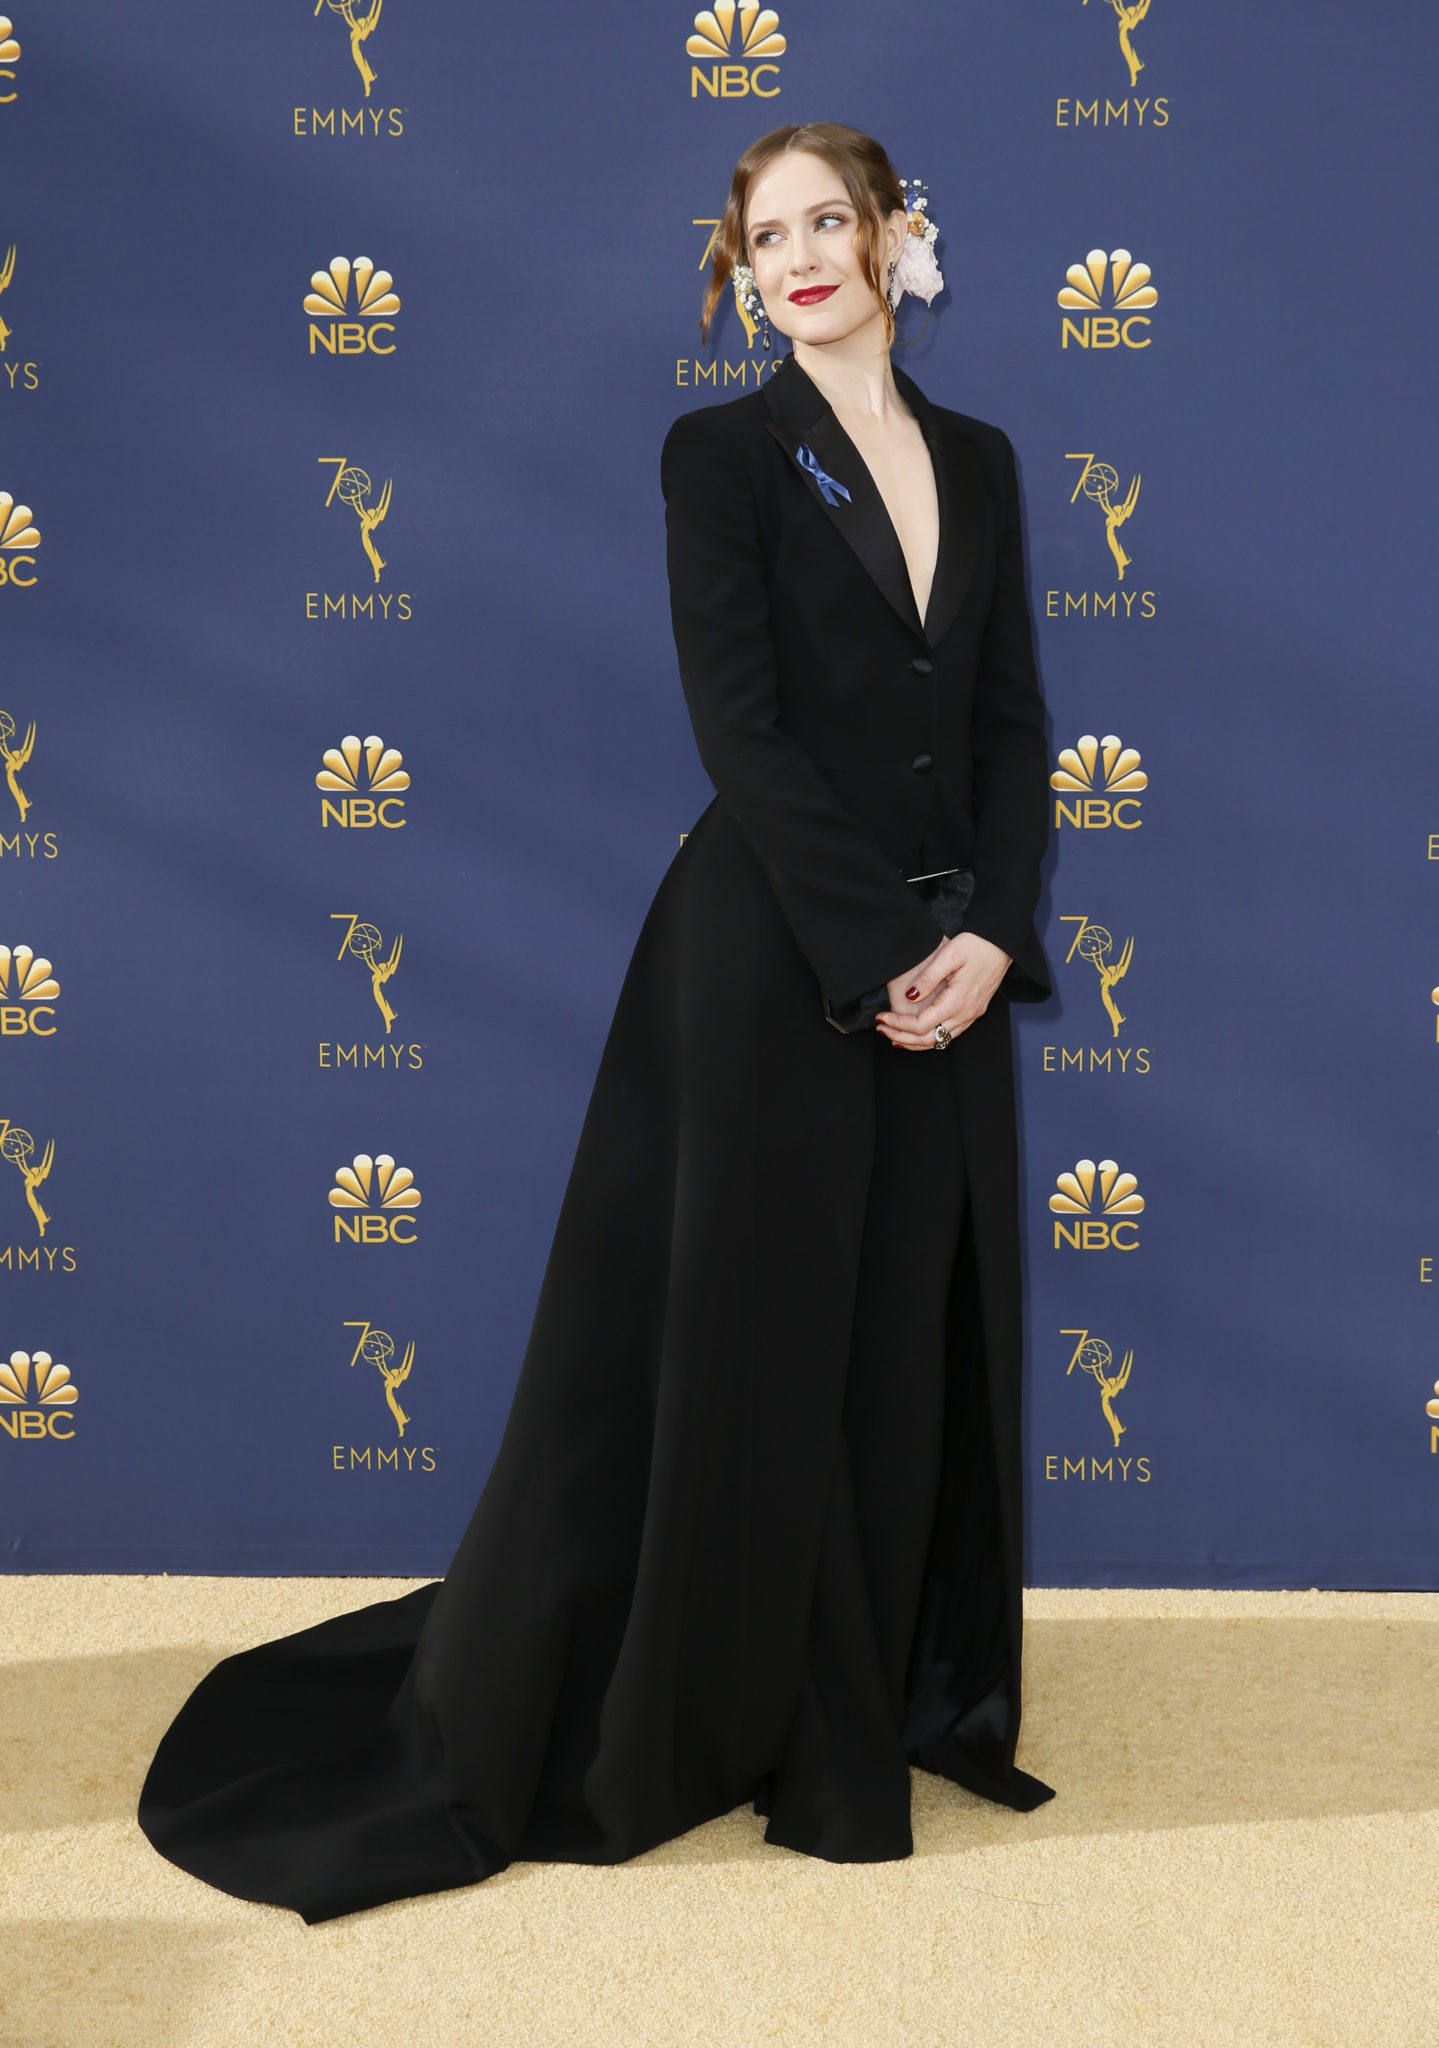 Evan Rachel Wood Emmys 4Chion Lifestyle